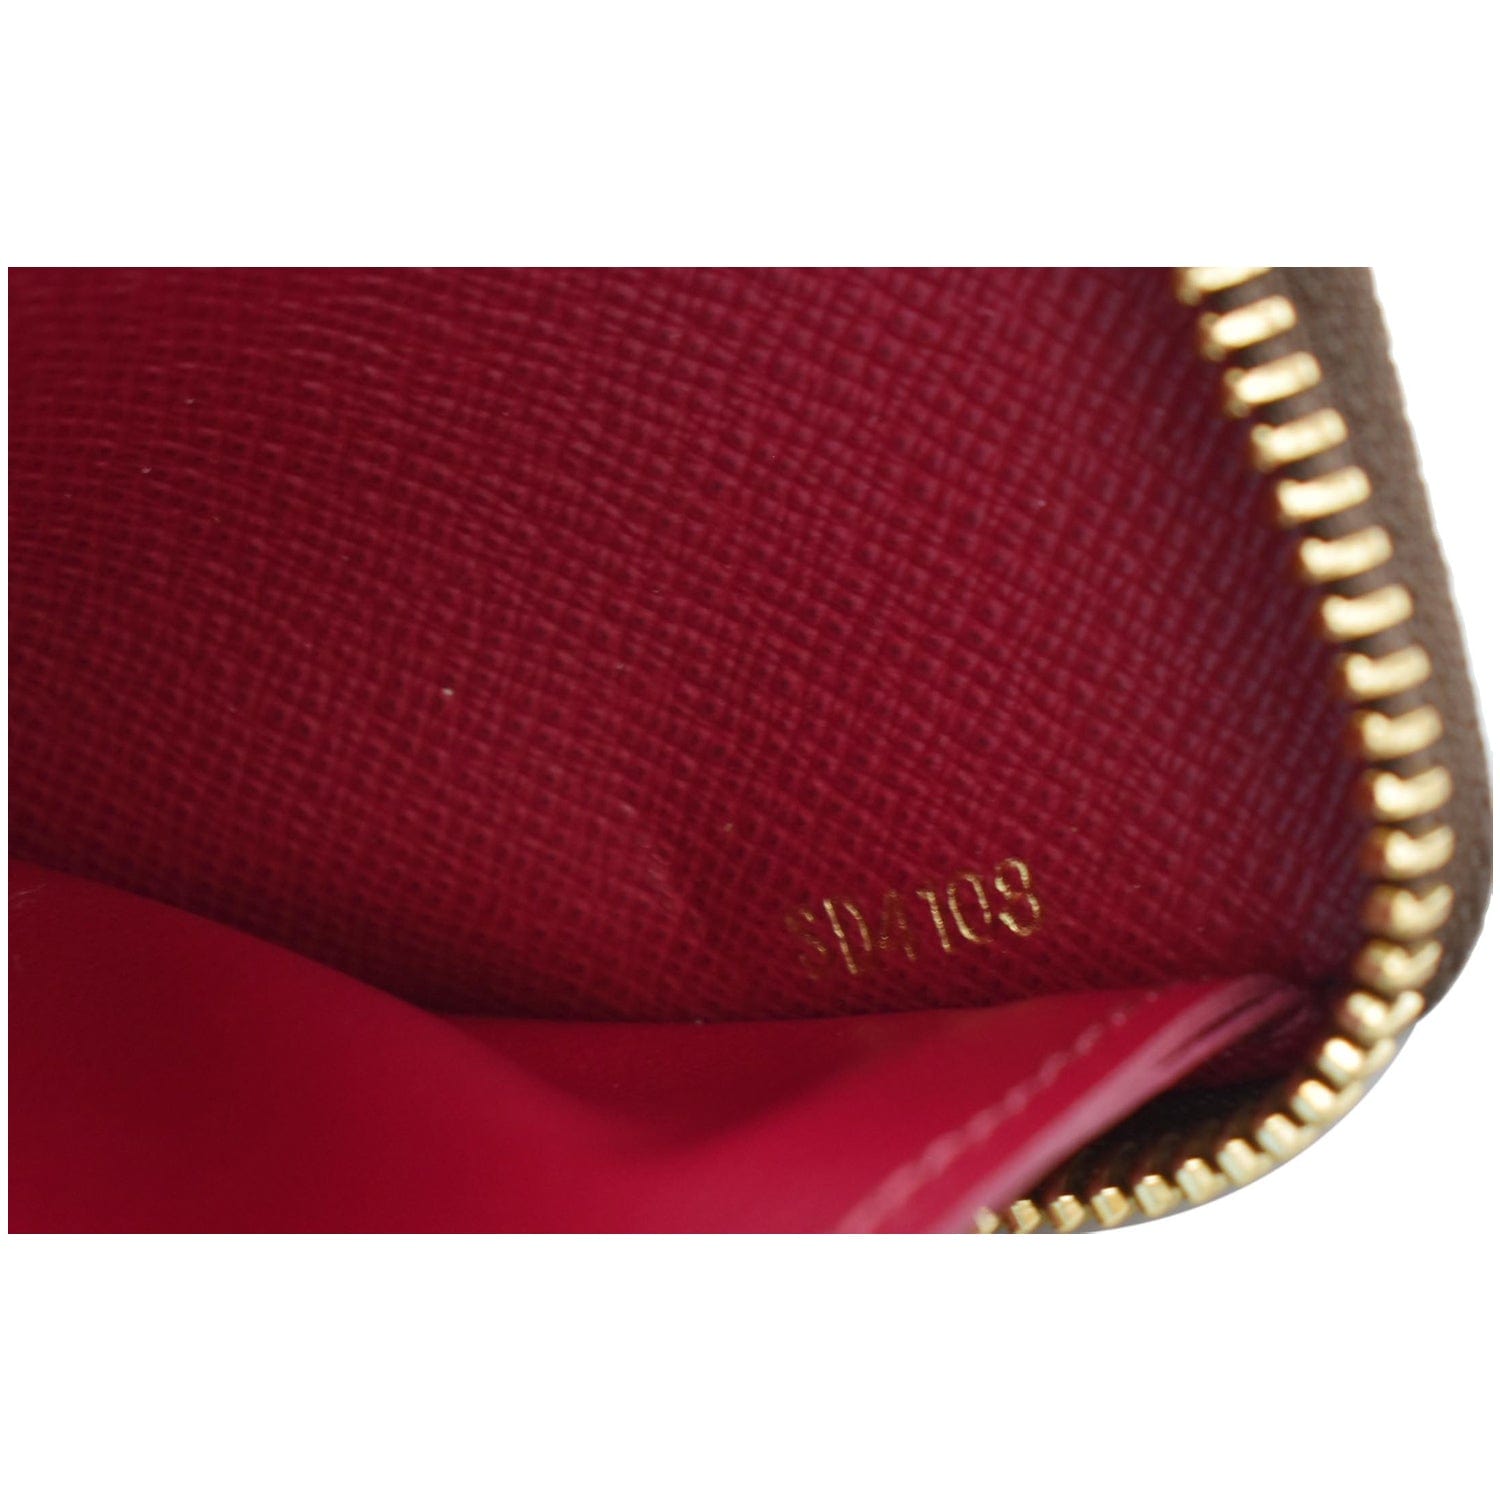 Louis Vuitton Clemence Wallet Monogram Brown/Berry